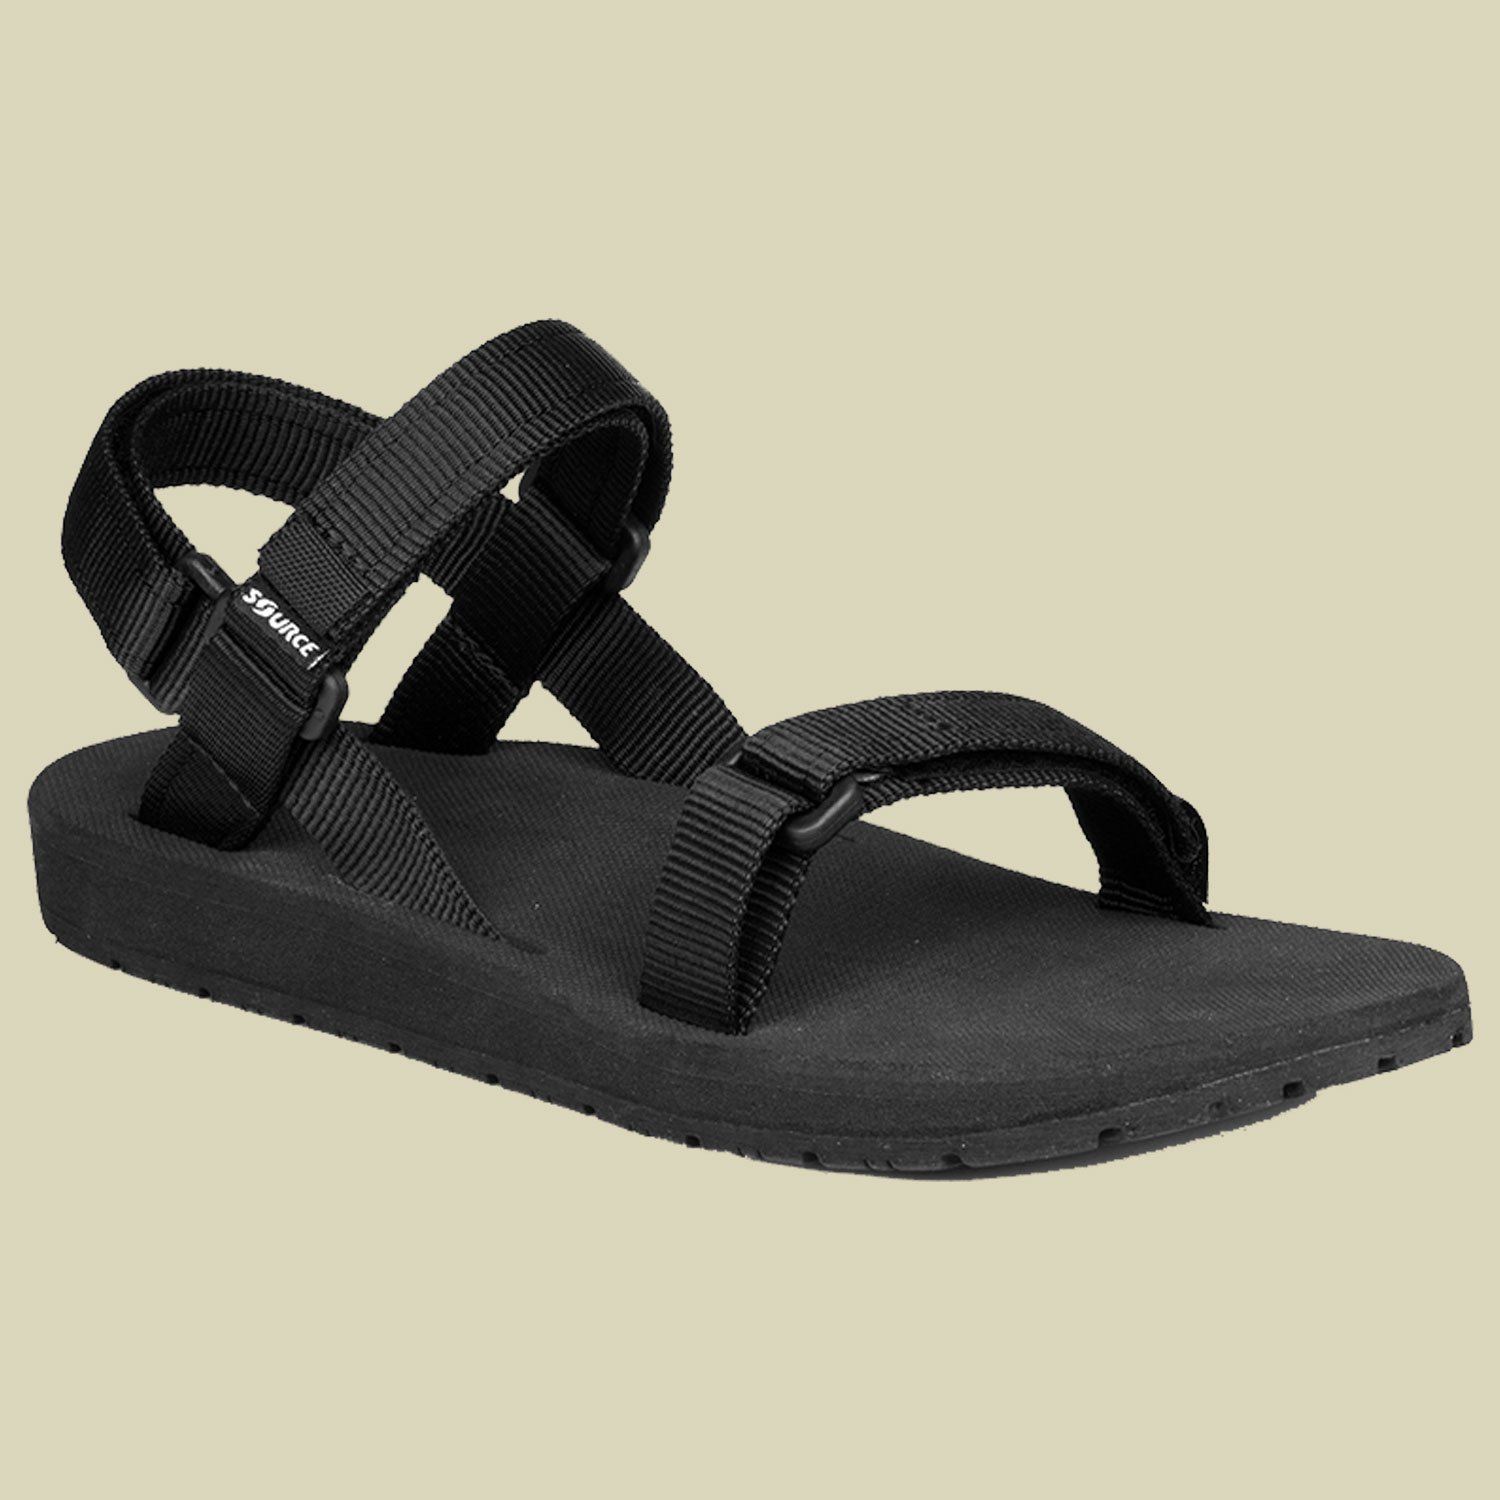 Classic Sandale Women Größe 36 Farbe black